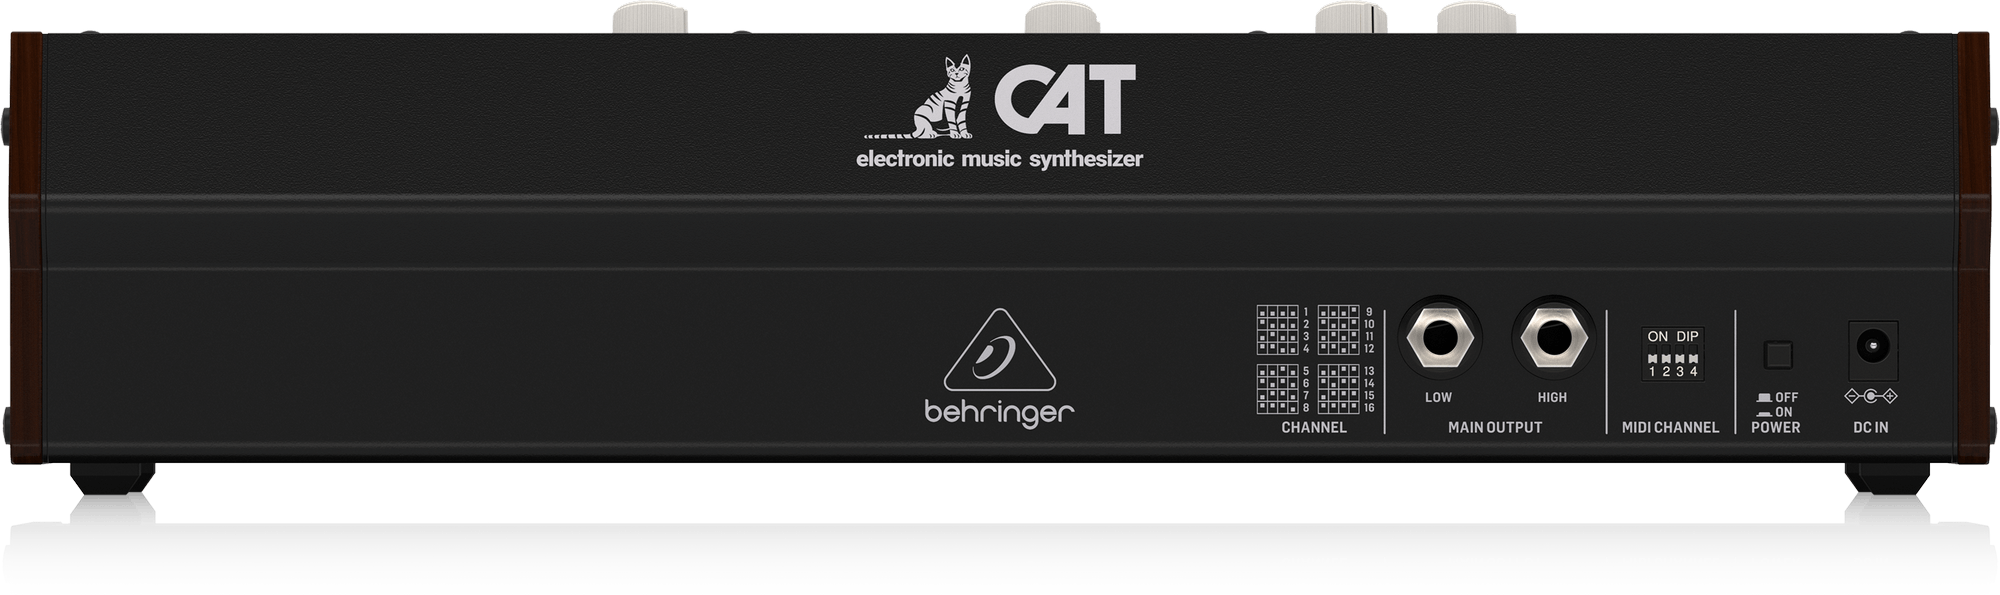 Behringer | Product | CAT